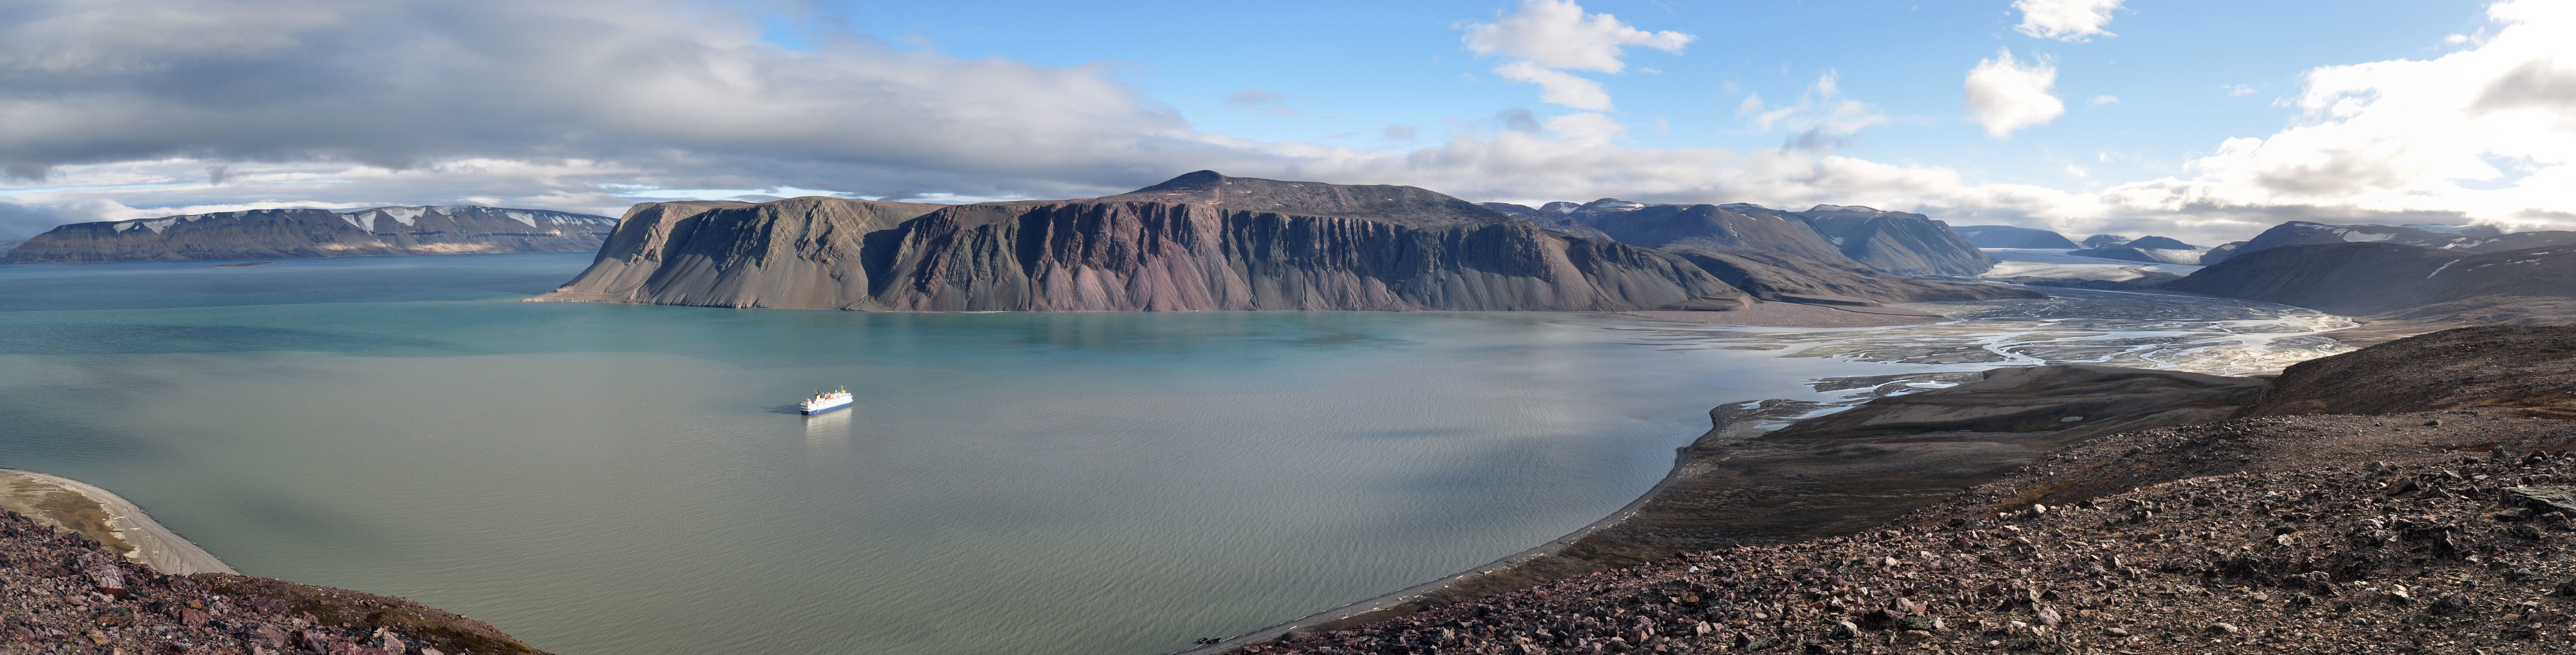 Faksevagen - Svalbard8.jpg